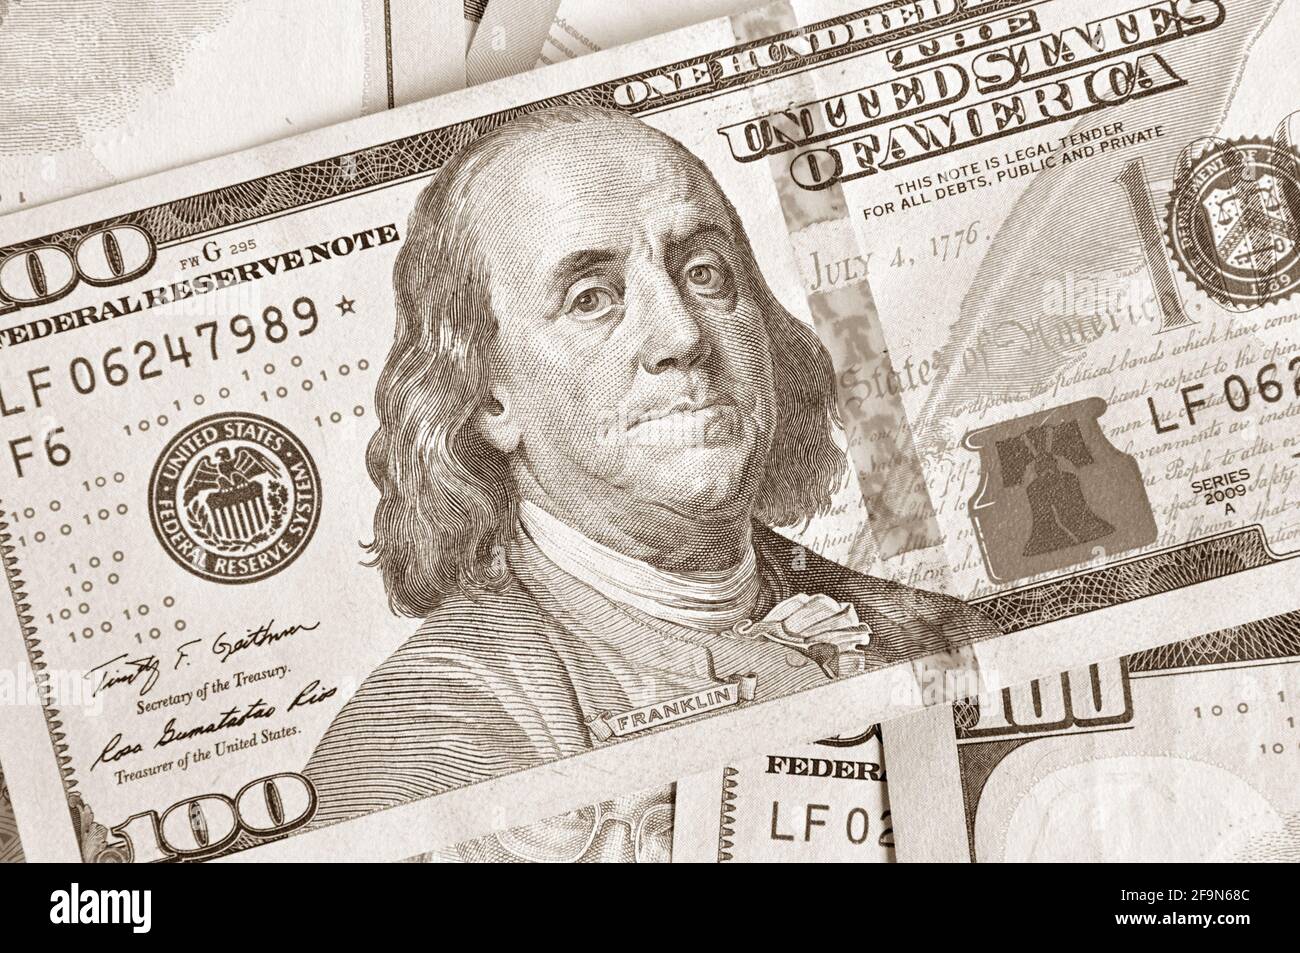 Money - 100 United States dollars (USD) bills - focusing on Benjamin Franklin face Stock Photo